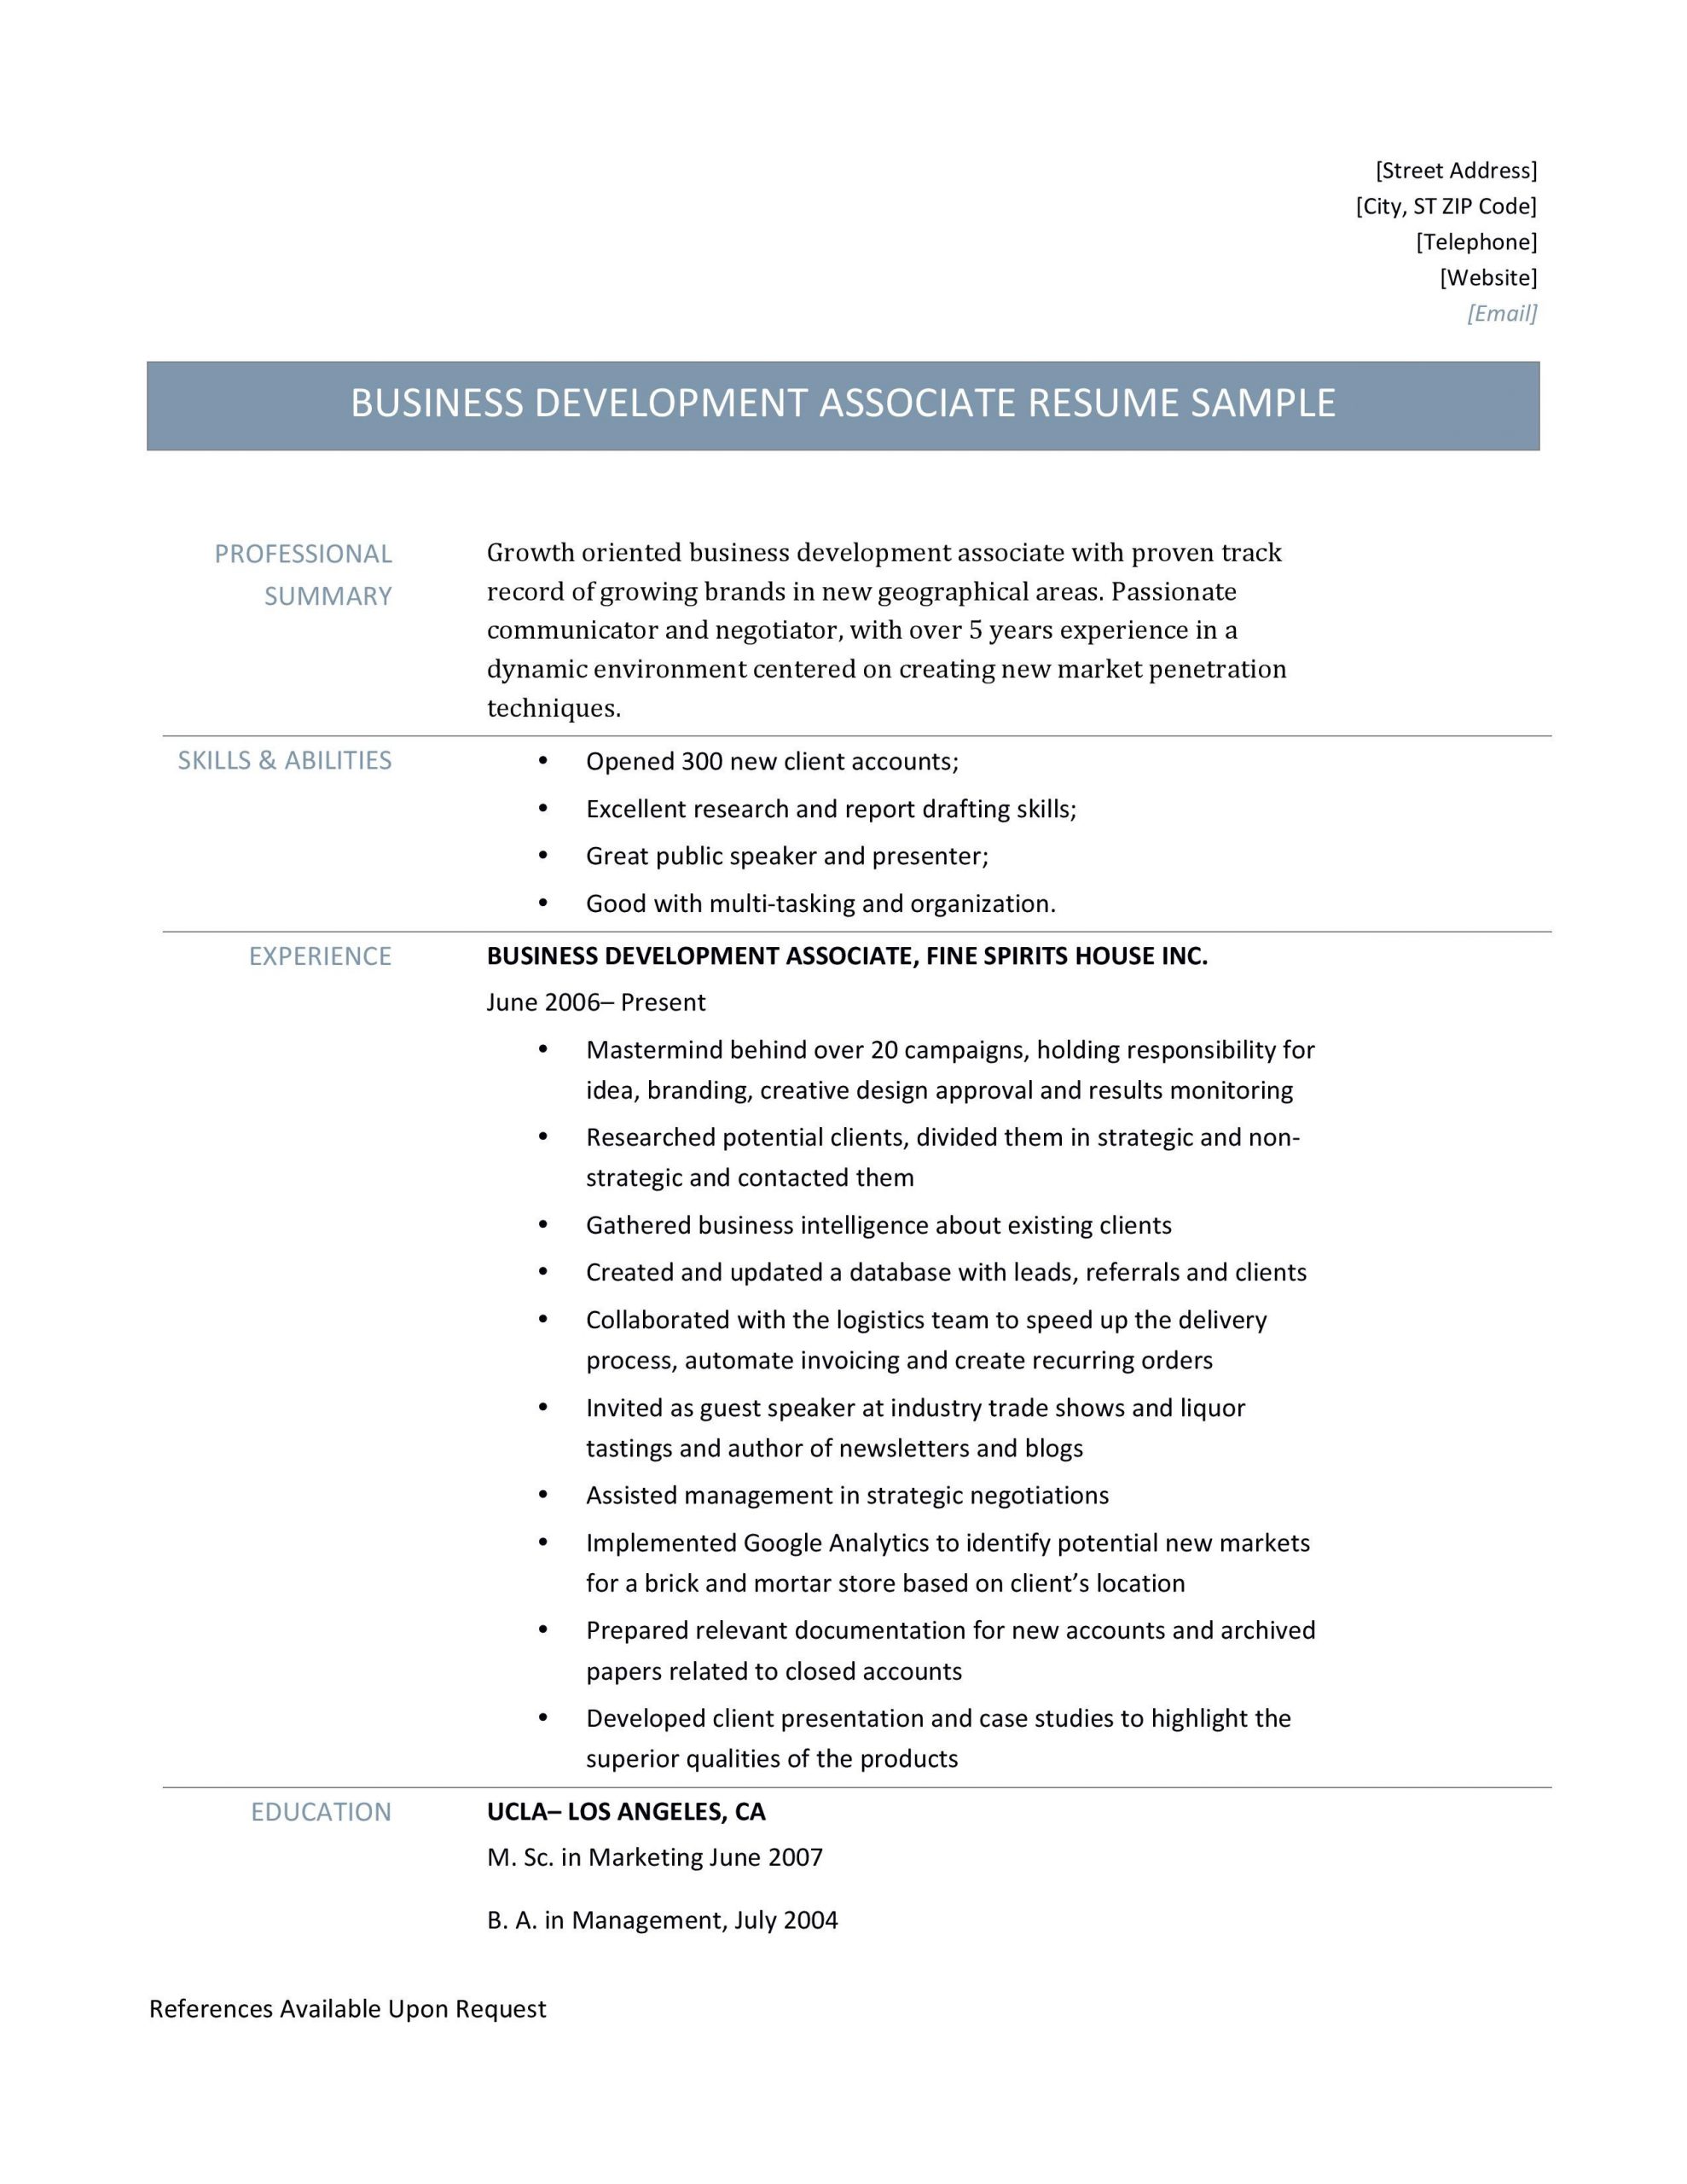 Sample Resume for Business Development associate Fresher Business Development associate Resume Template and Job